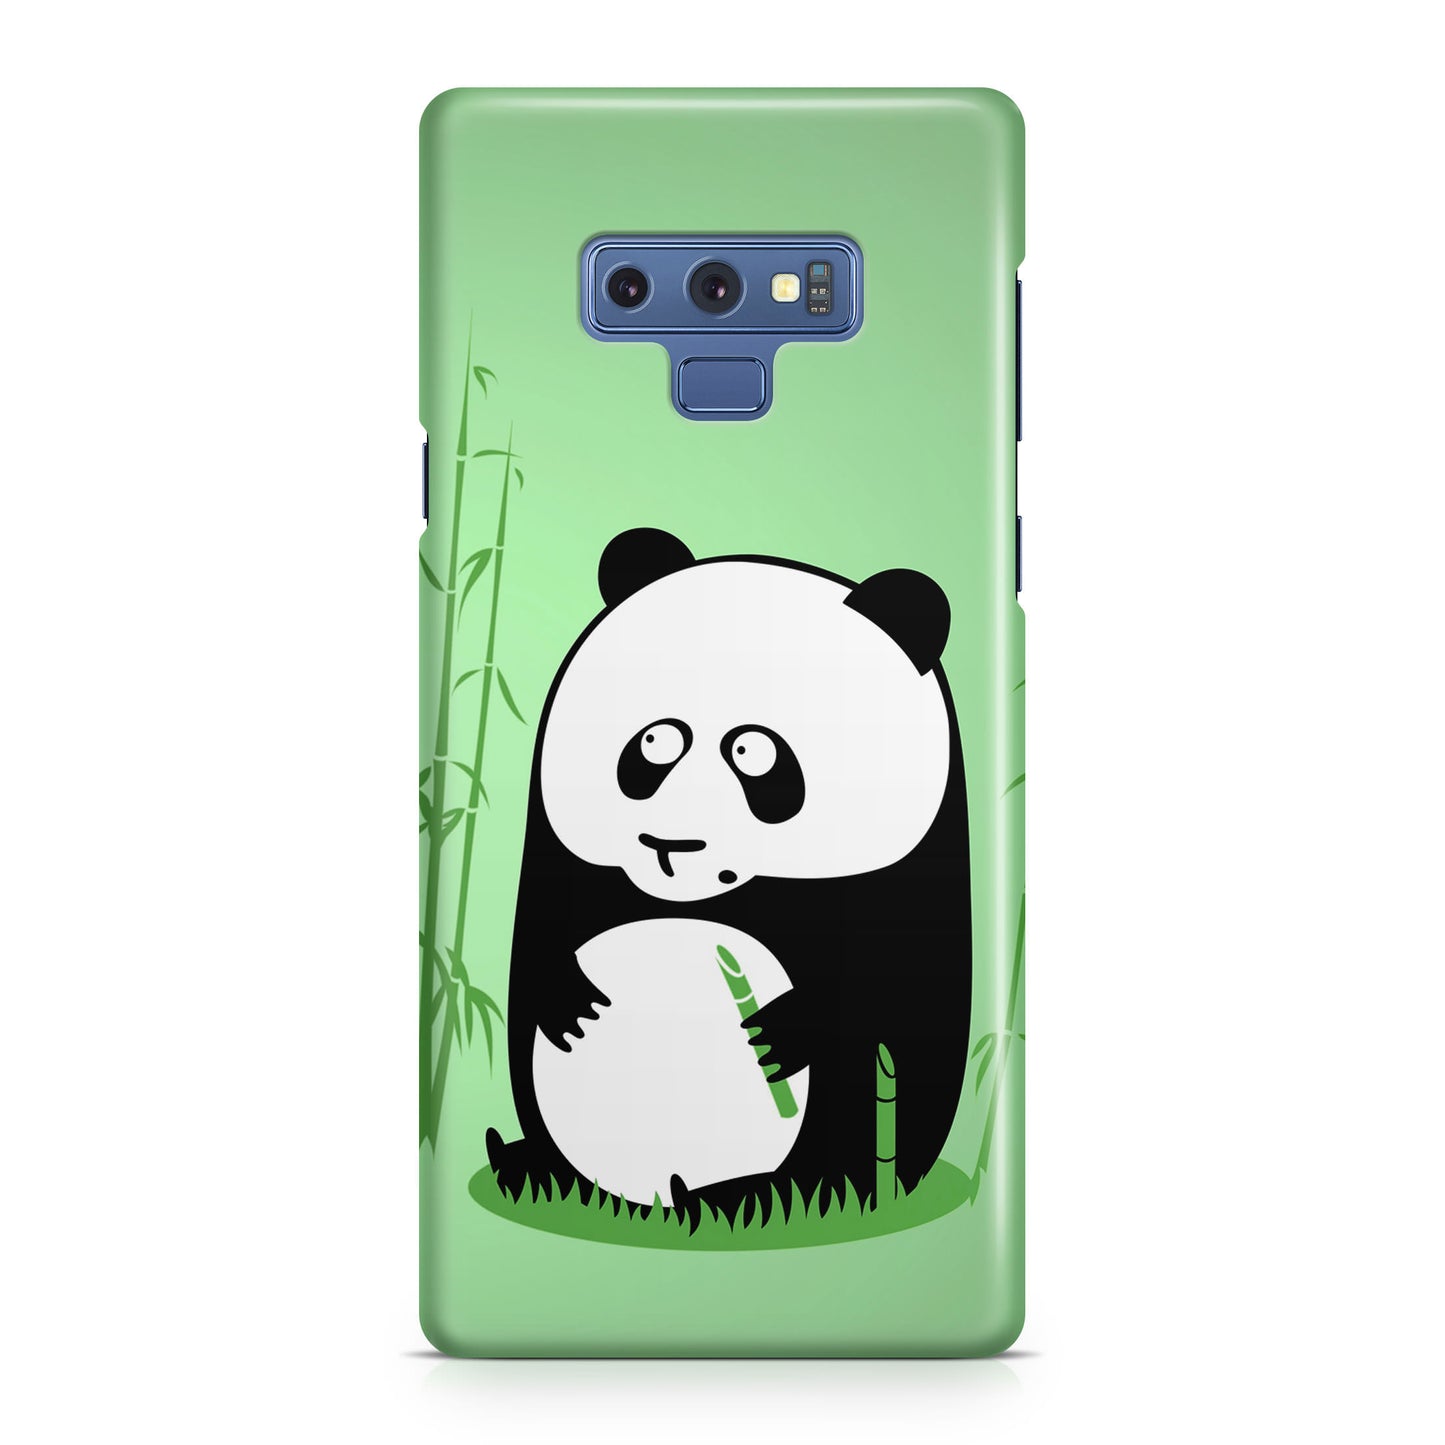 Panda Art Galaxy Note 9 Case